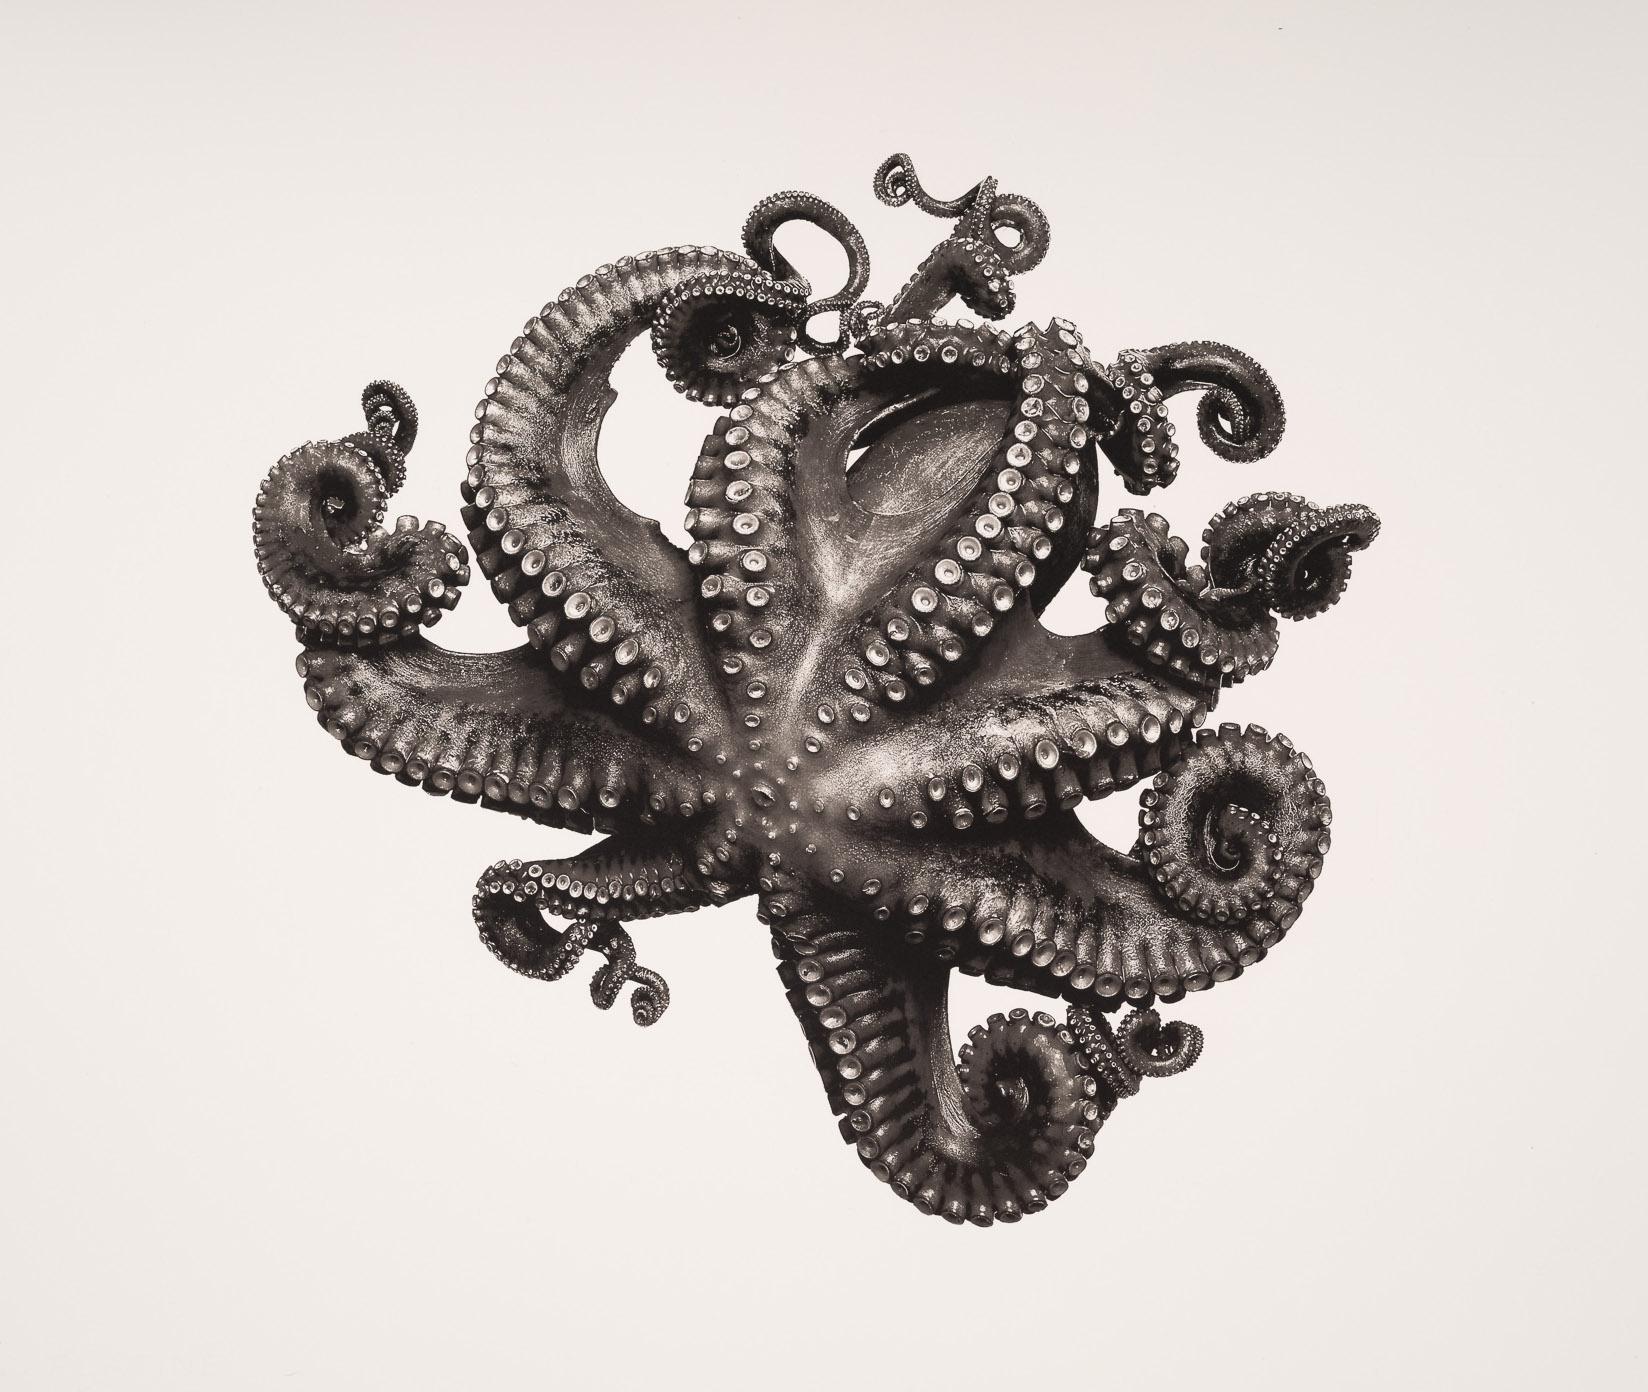 Still-Life Photograph Jan C. Schlegel - Octopus Vulgaris (édition spéciale)